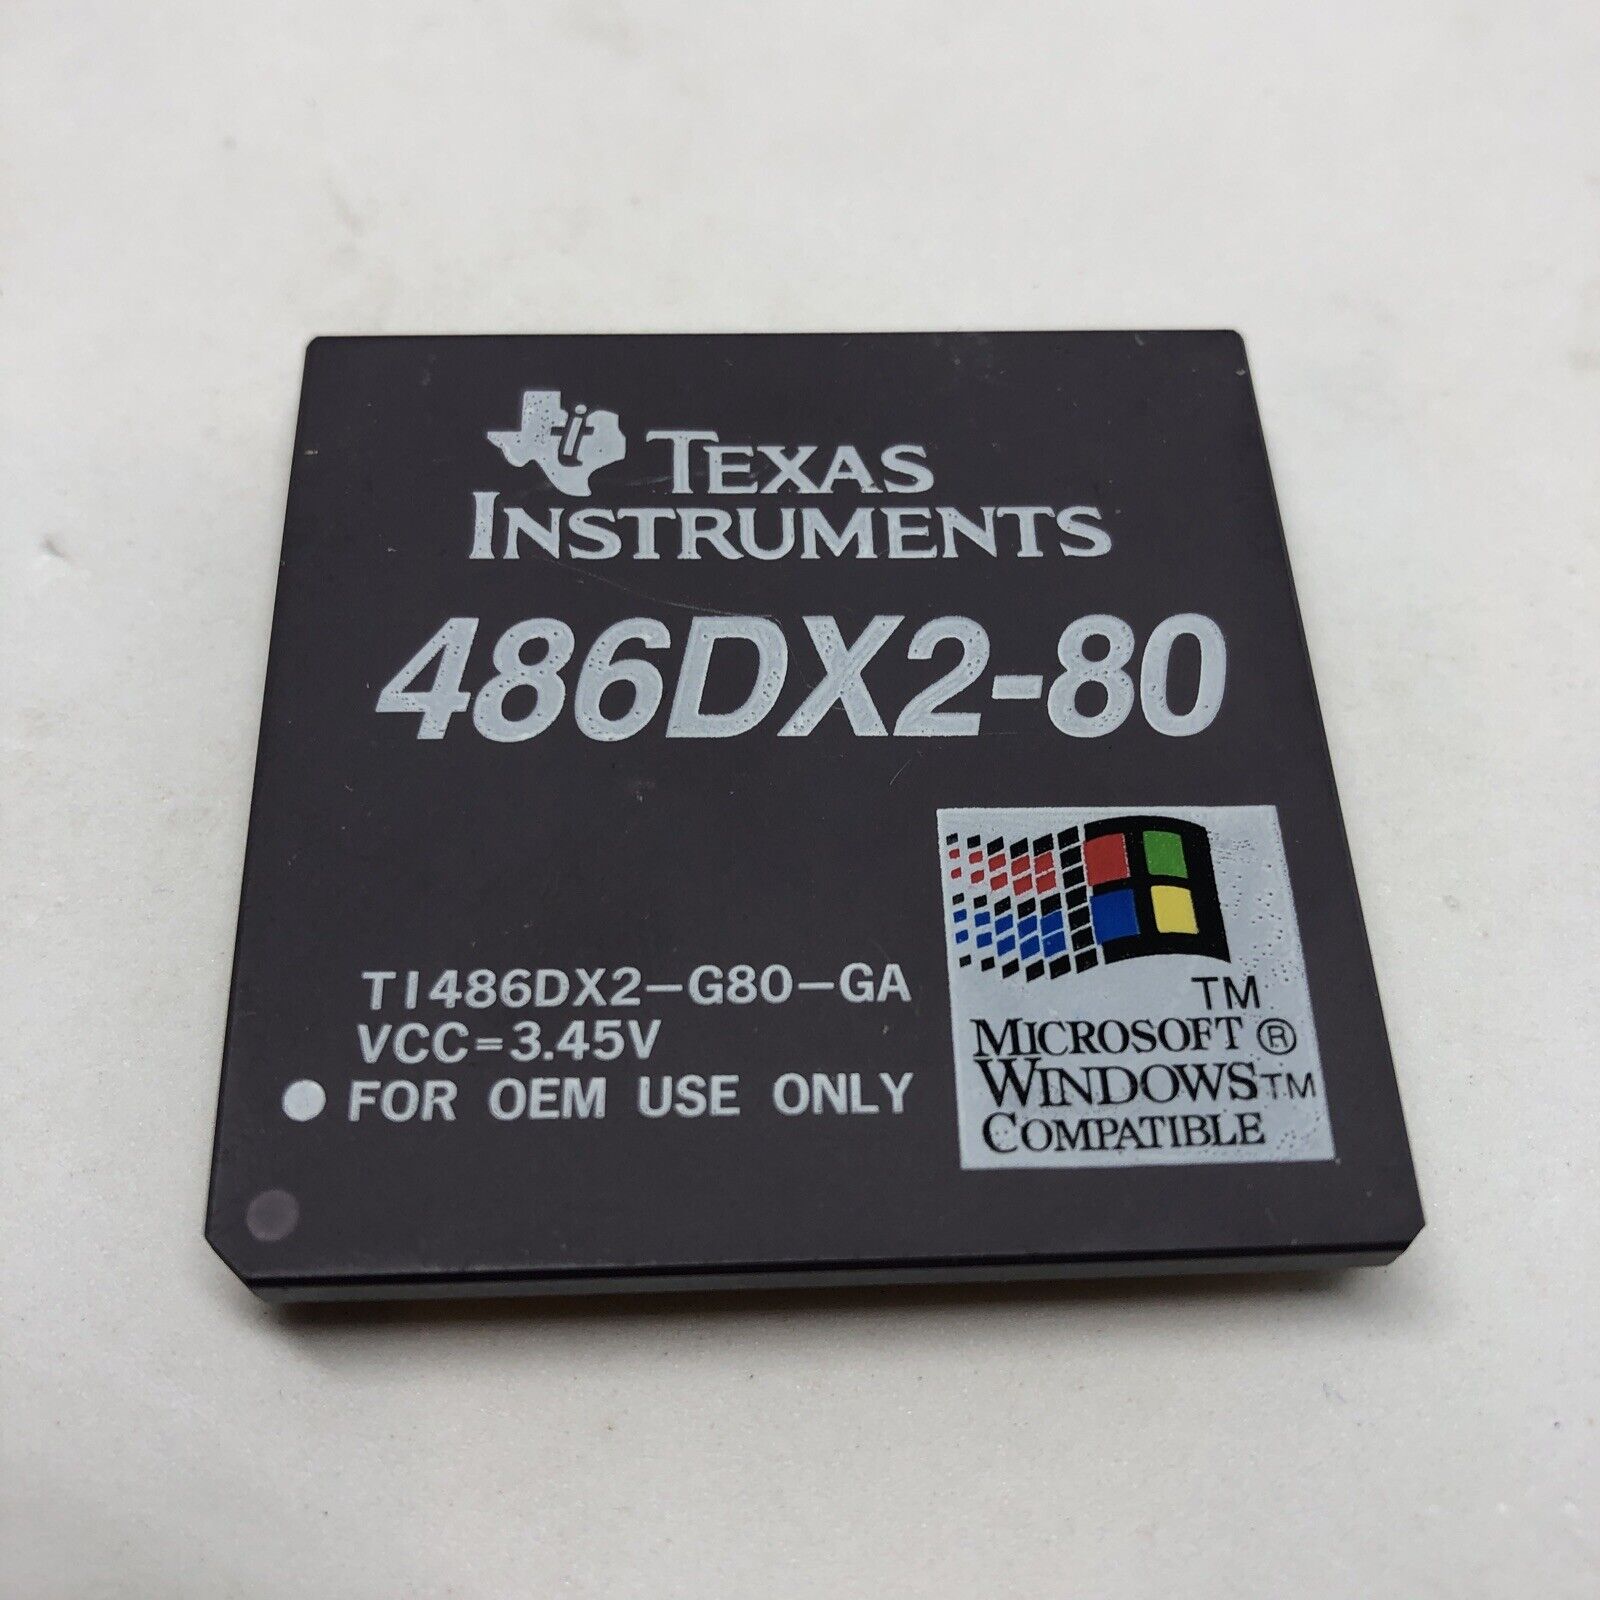 NEW 486 DX2/80 Texas Instruments Processor, 80MHz 486 DX2 80Mhz Rare Vintage G80